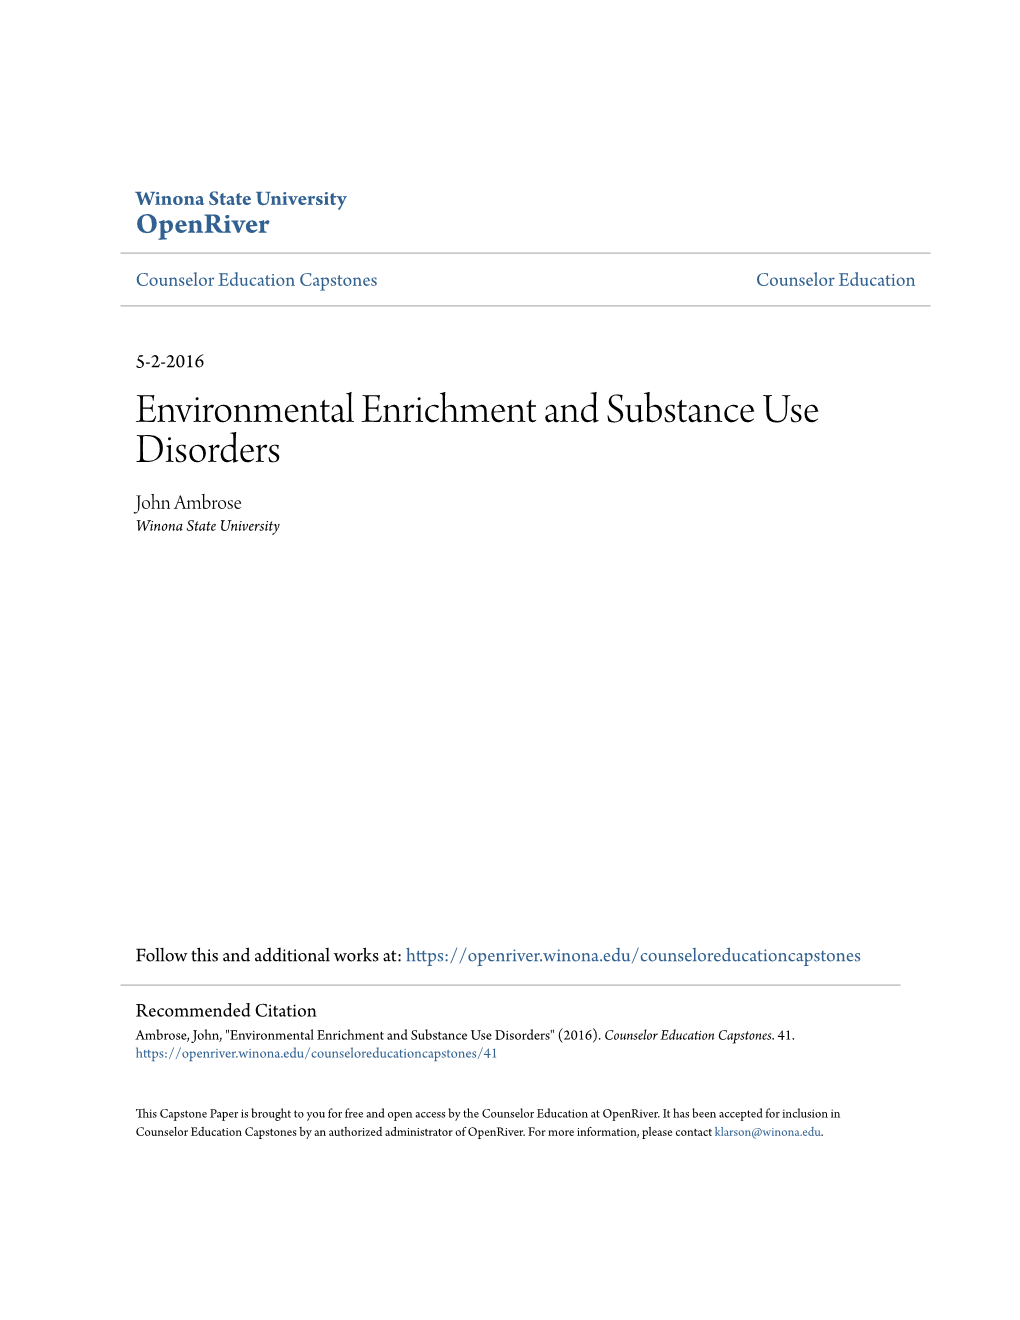 Environmental Enrichment and Substance Use Disorders John Ambrose Winona State University